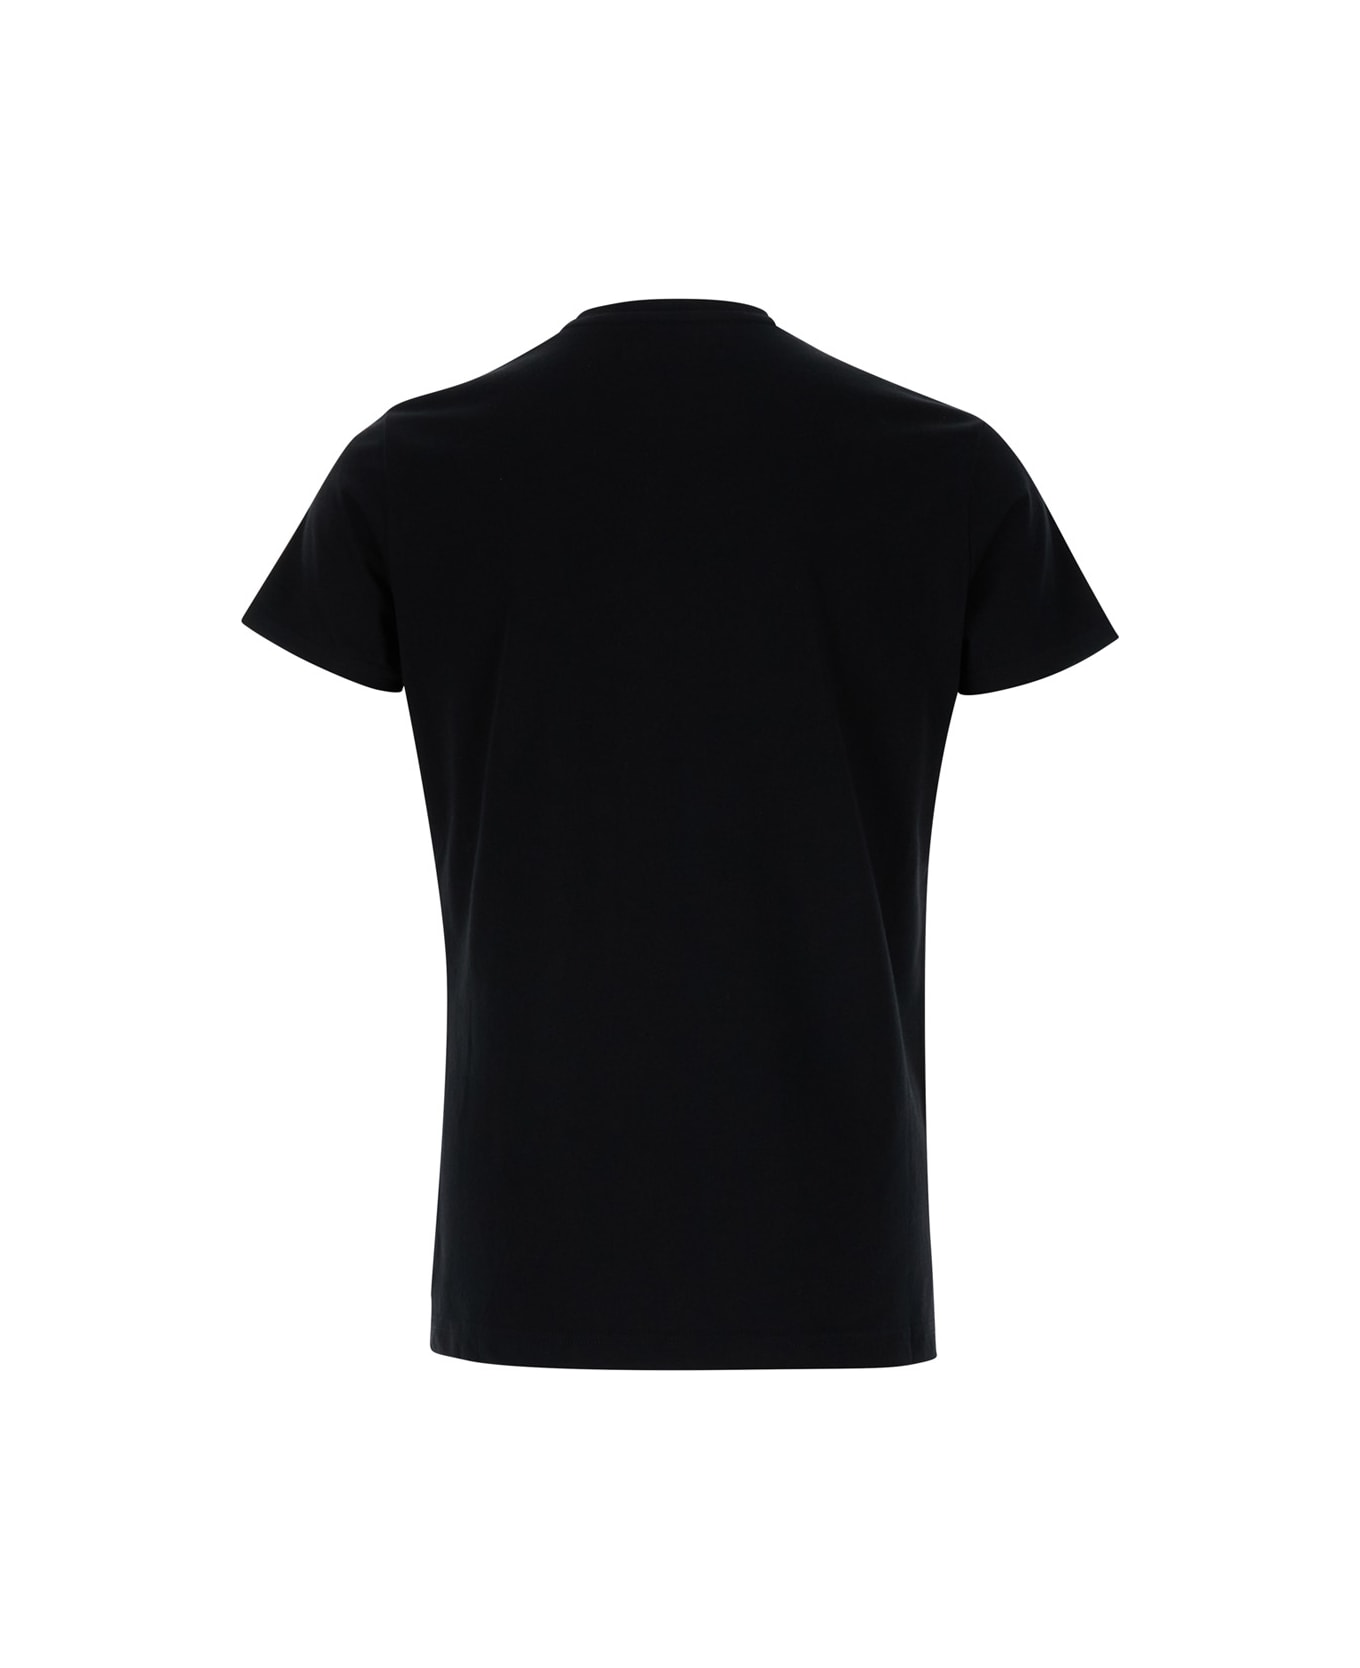 Vivienne Westwood T-shirt - Black